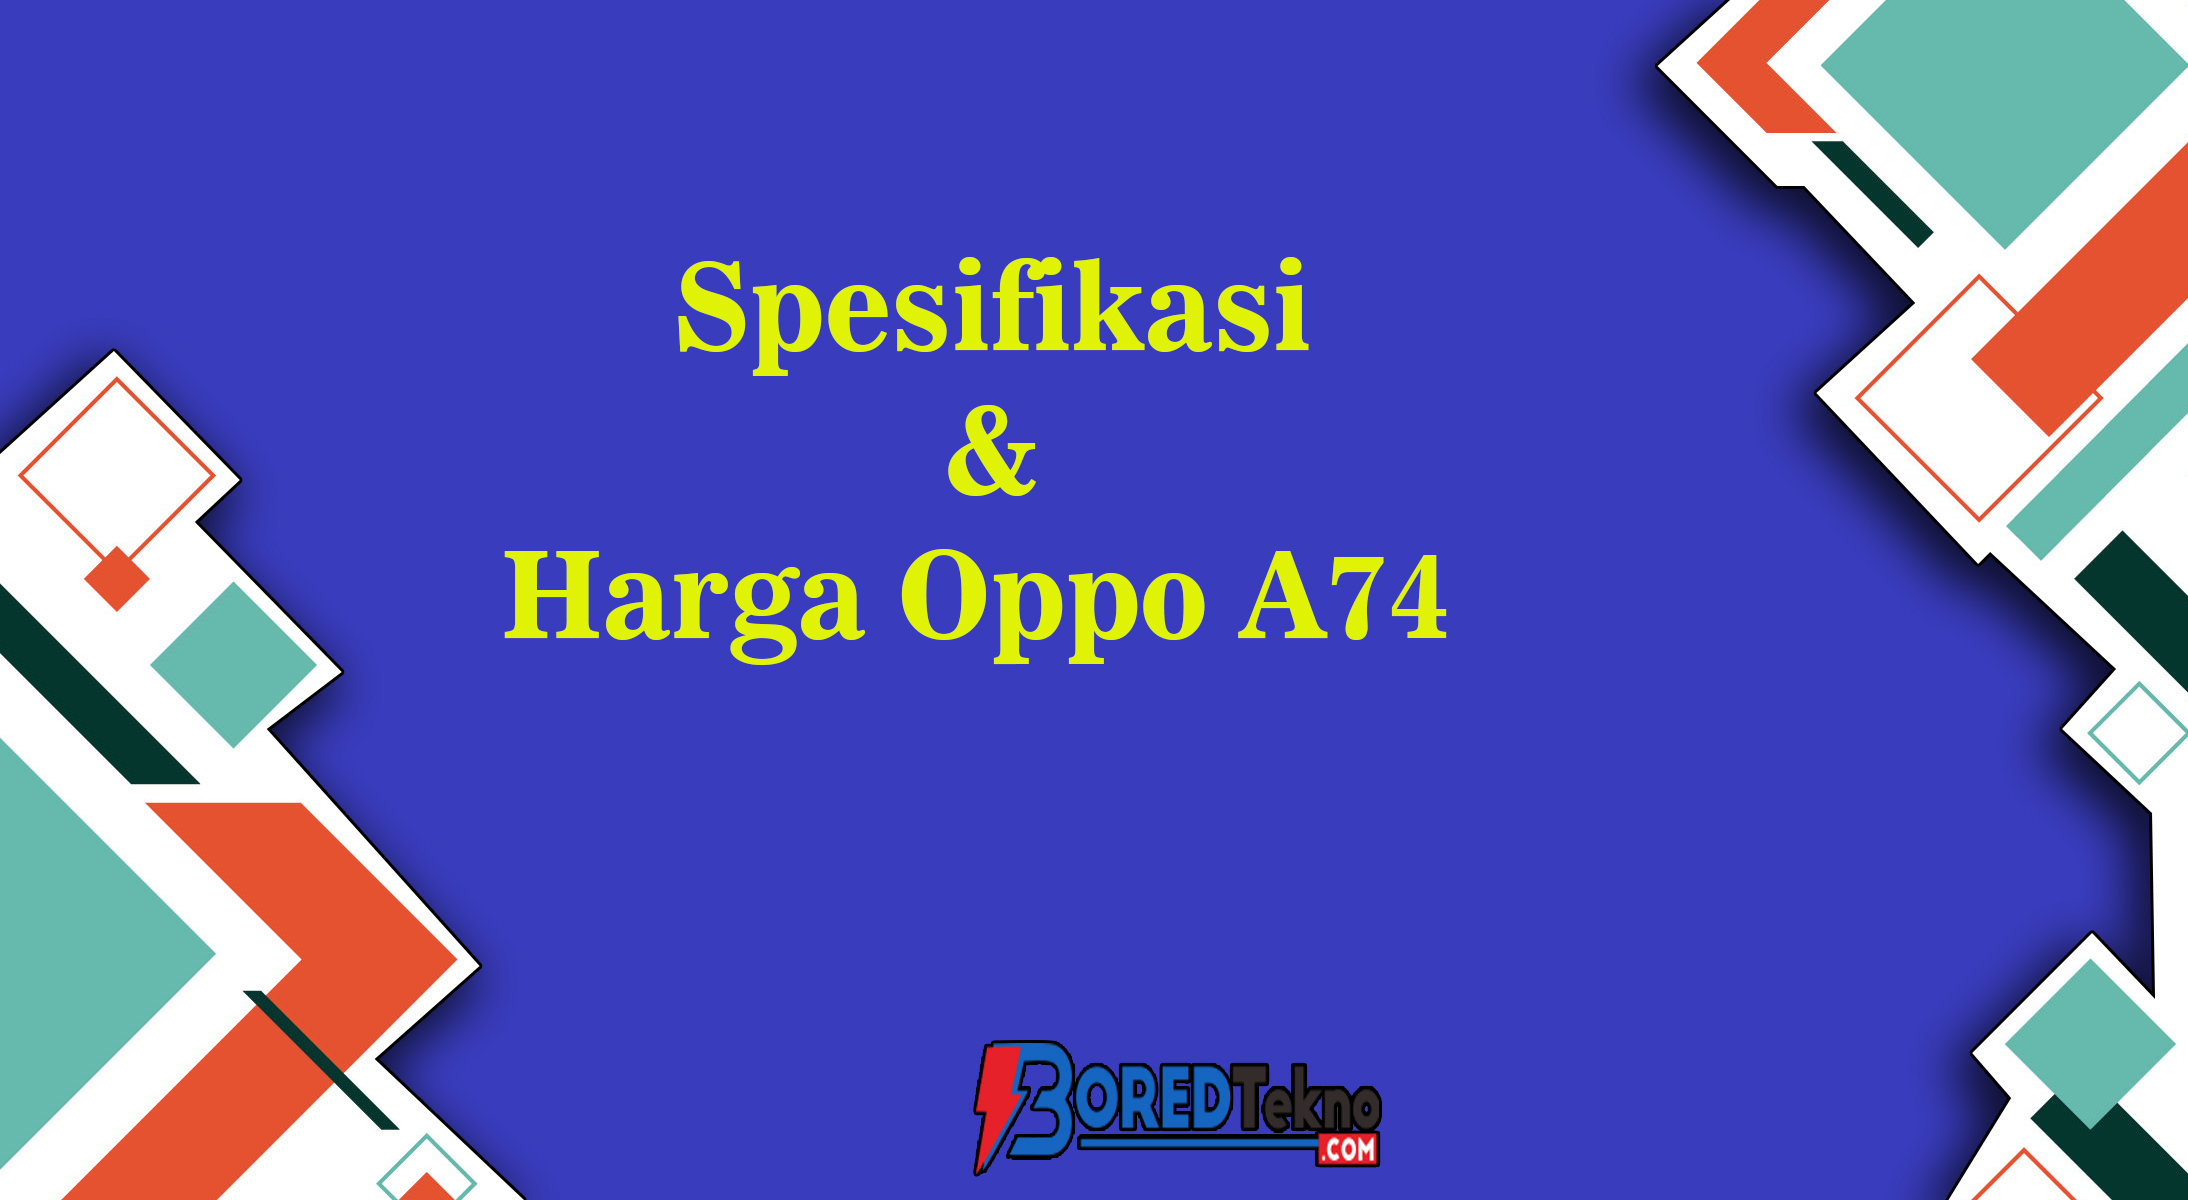 Spesifikasi & Harga Oppo A74